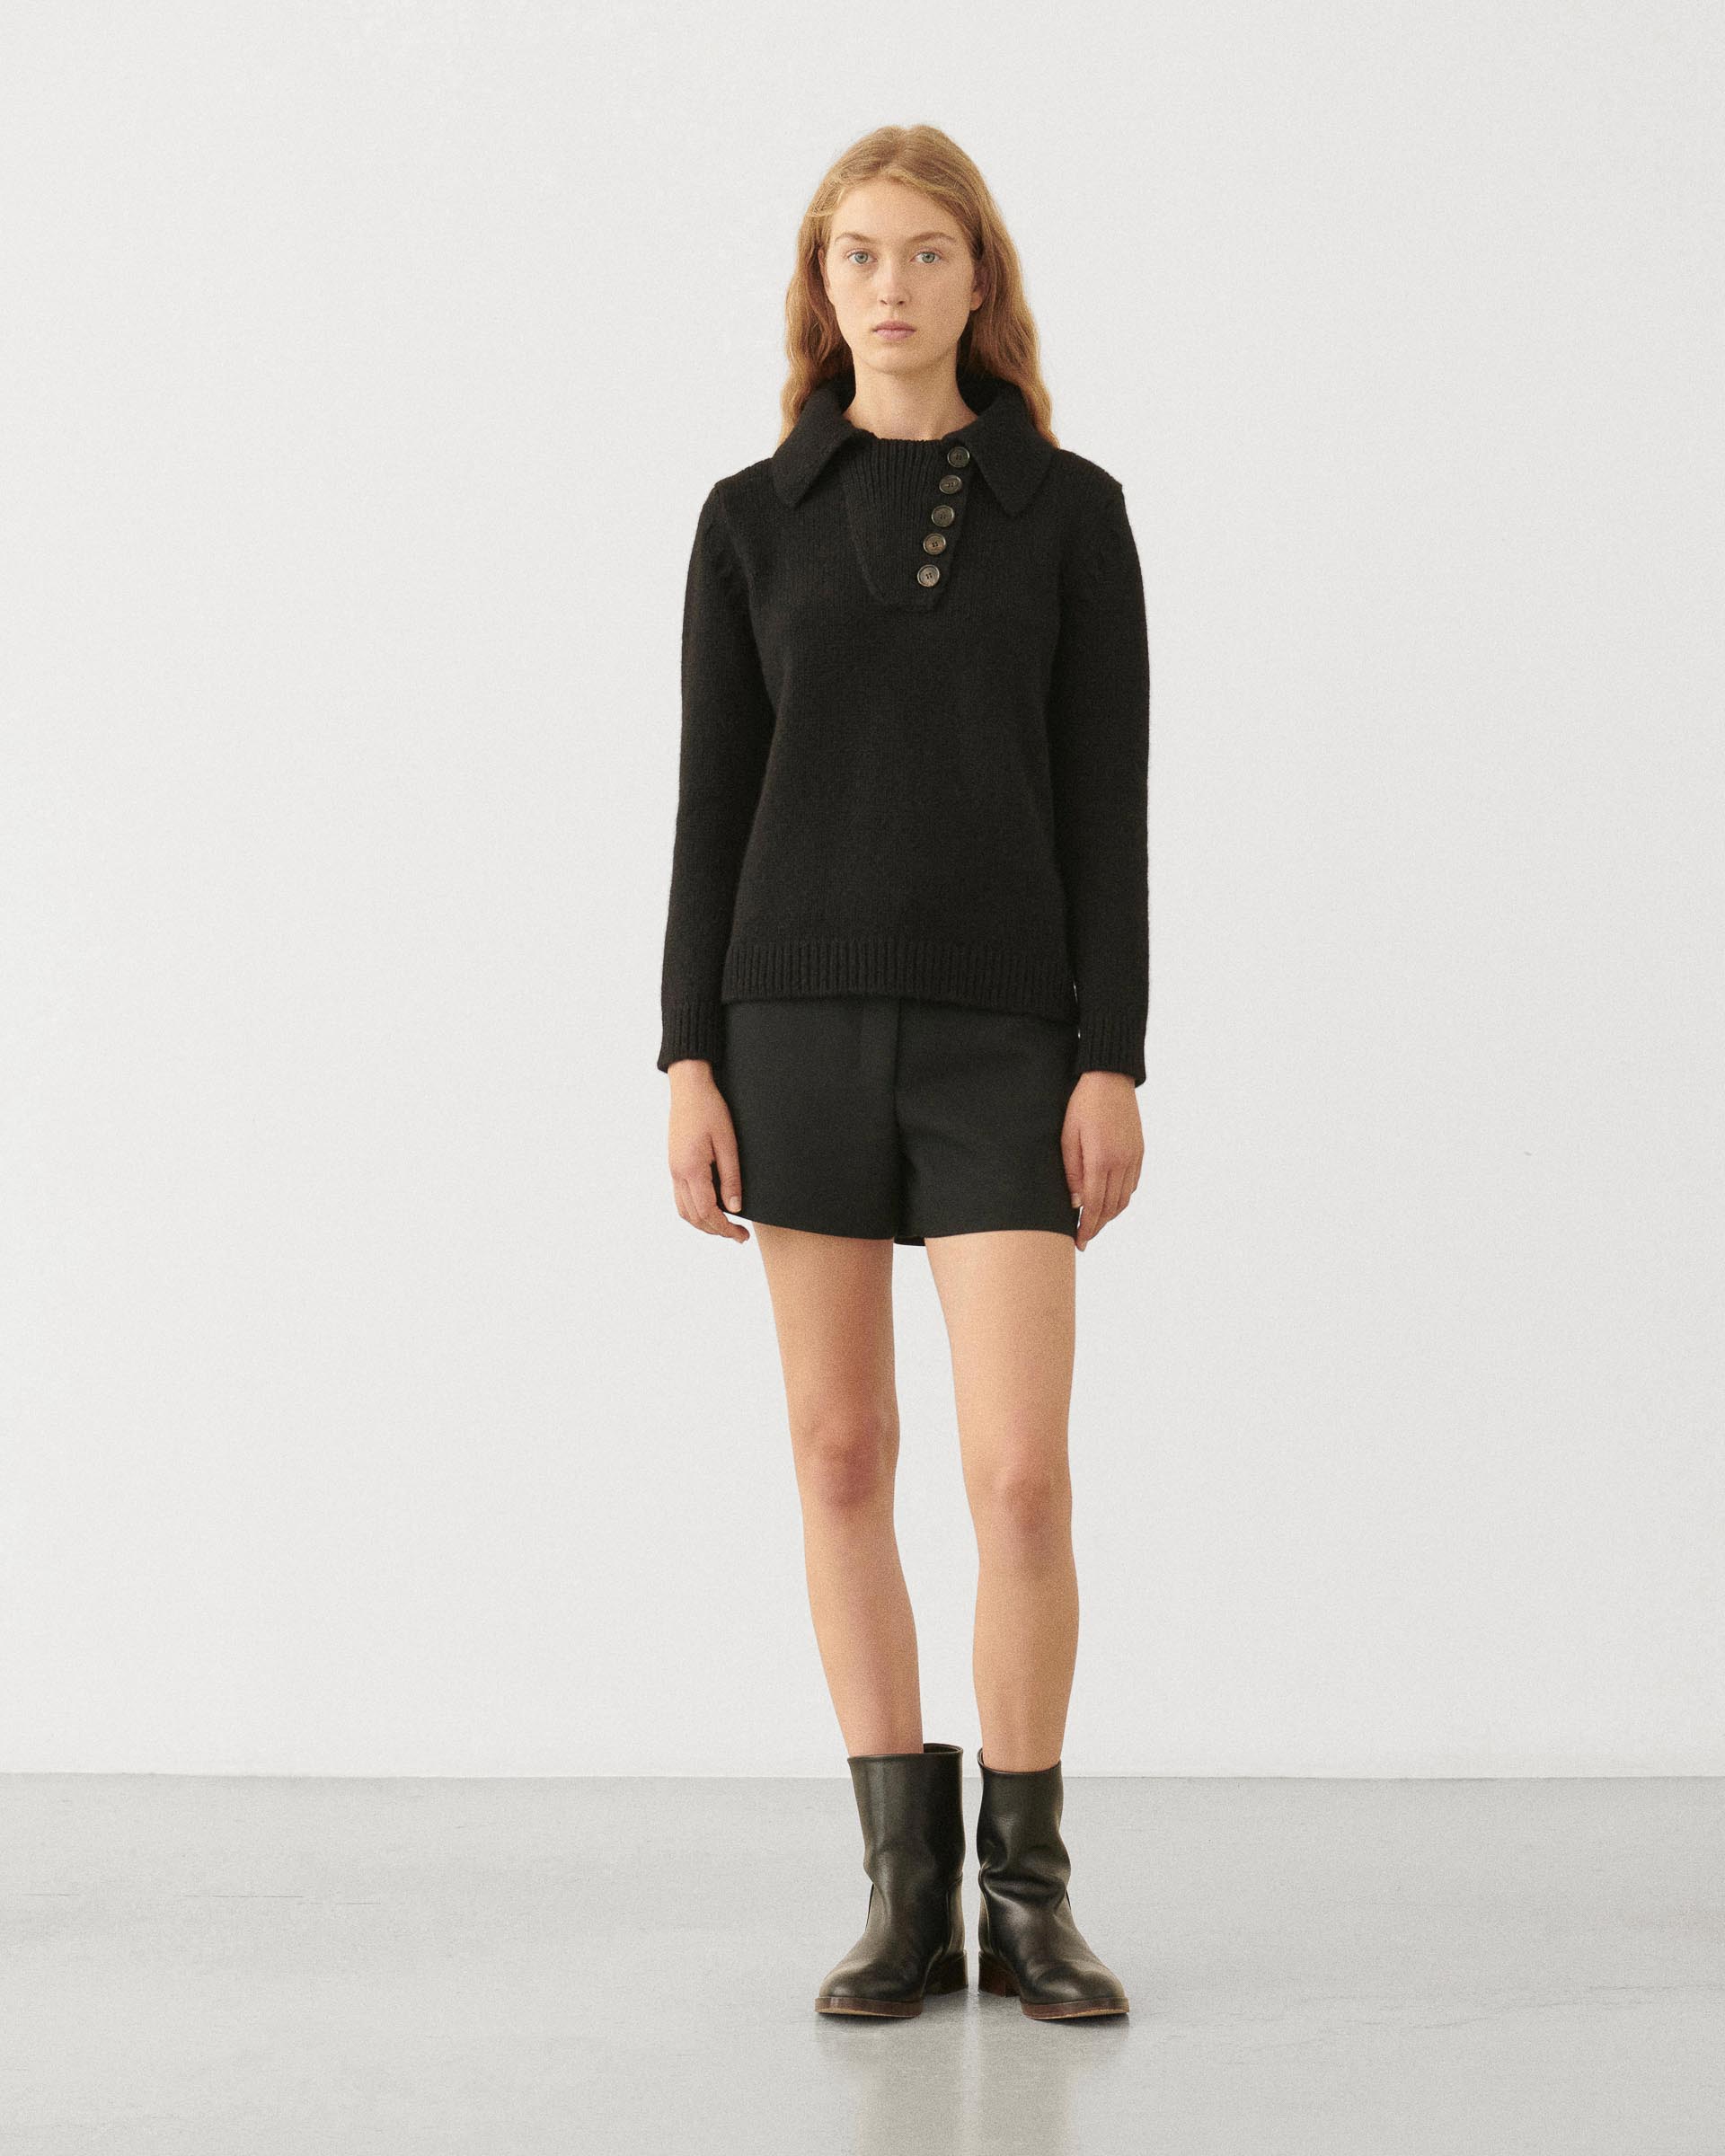 Ana Sweater in Cashmere, Black